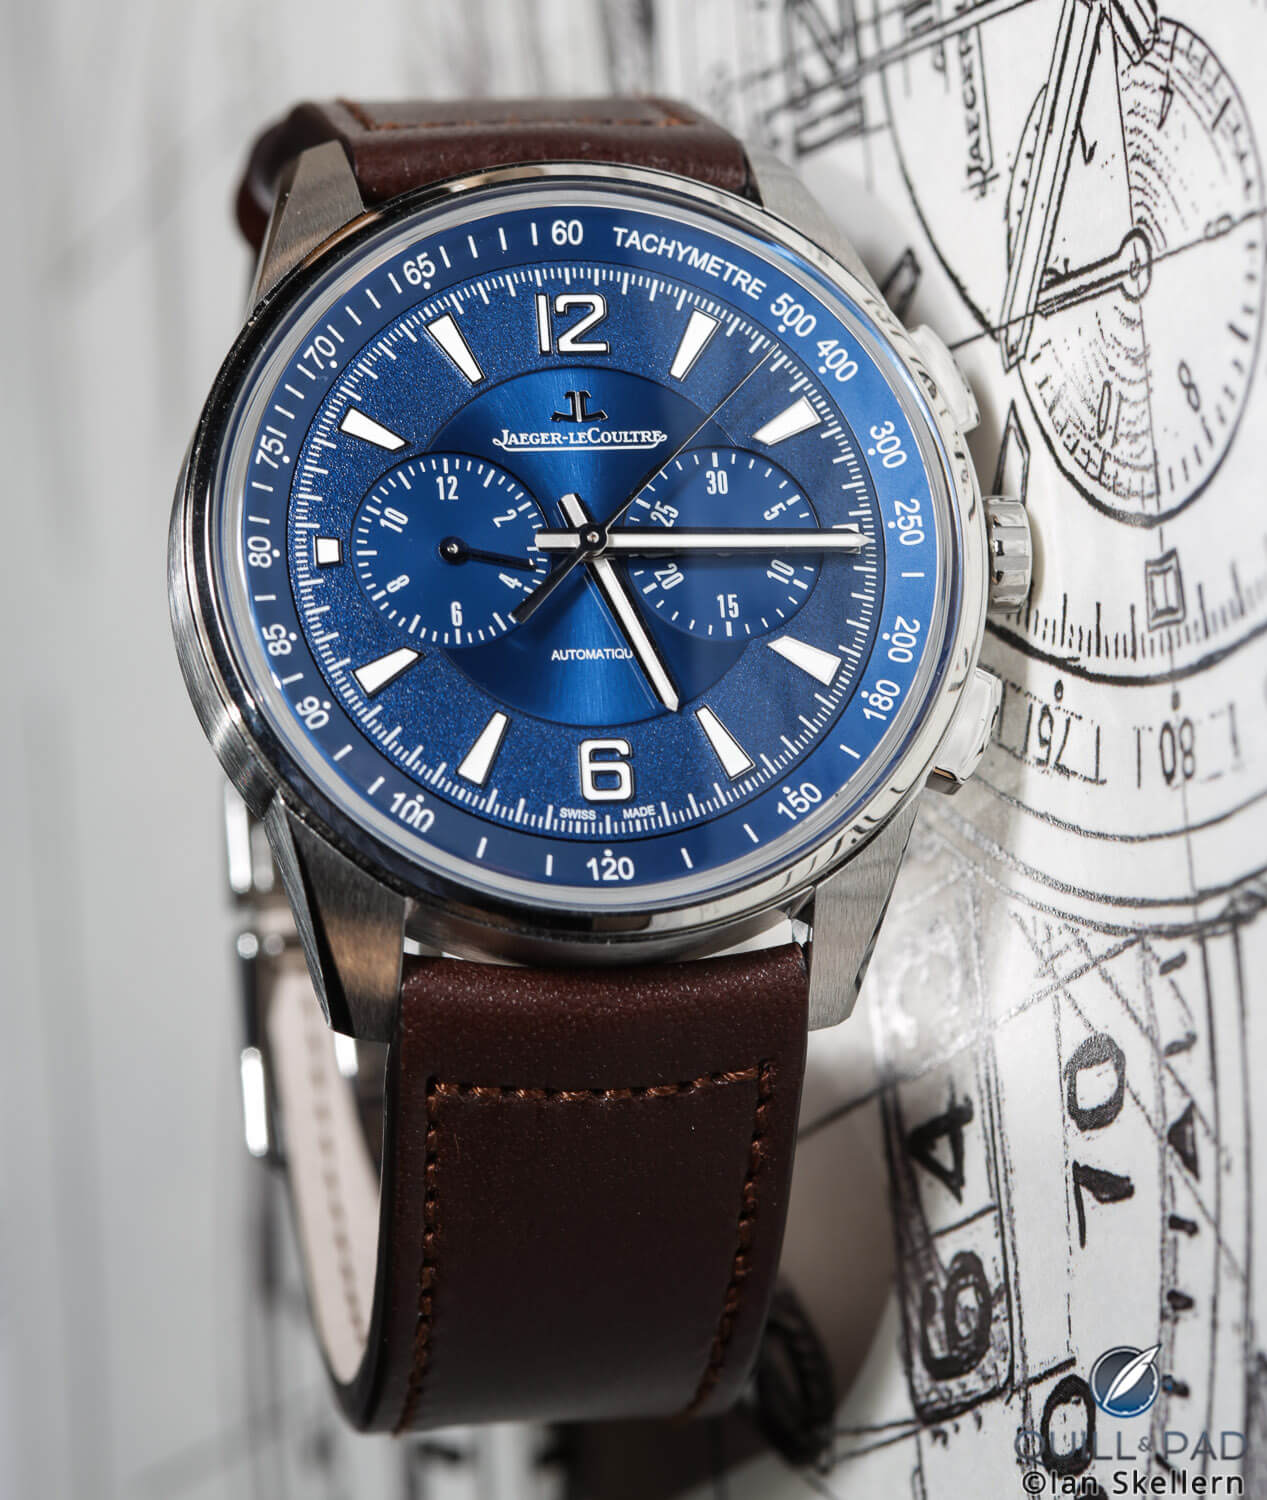 Jaeger-LeCoultre Polaris chronograph with blue dial